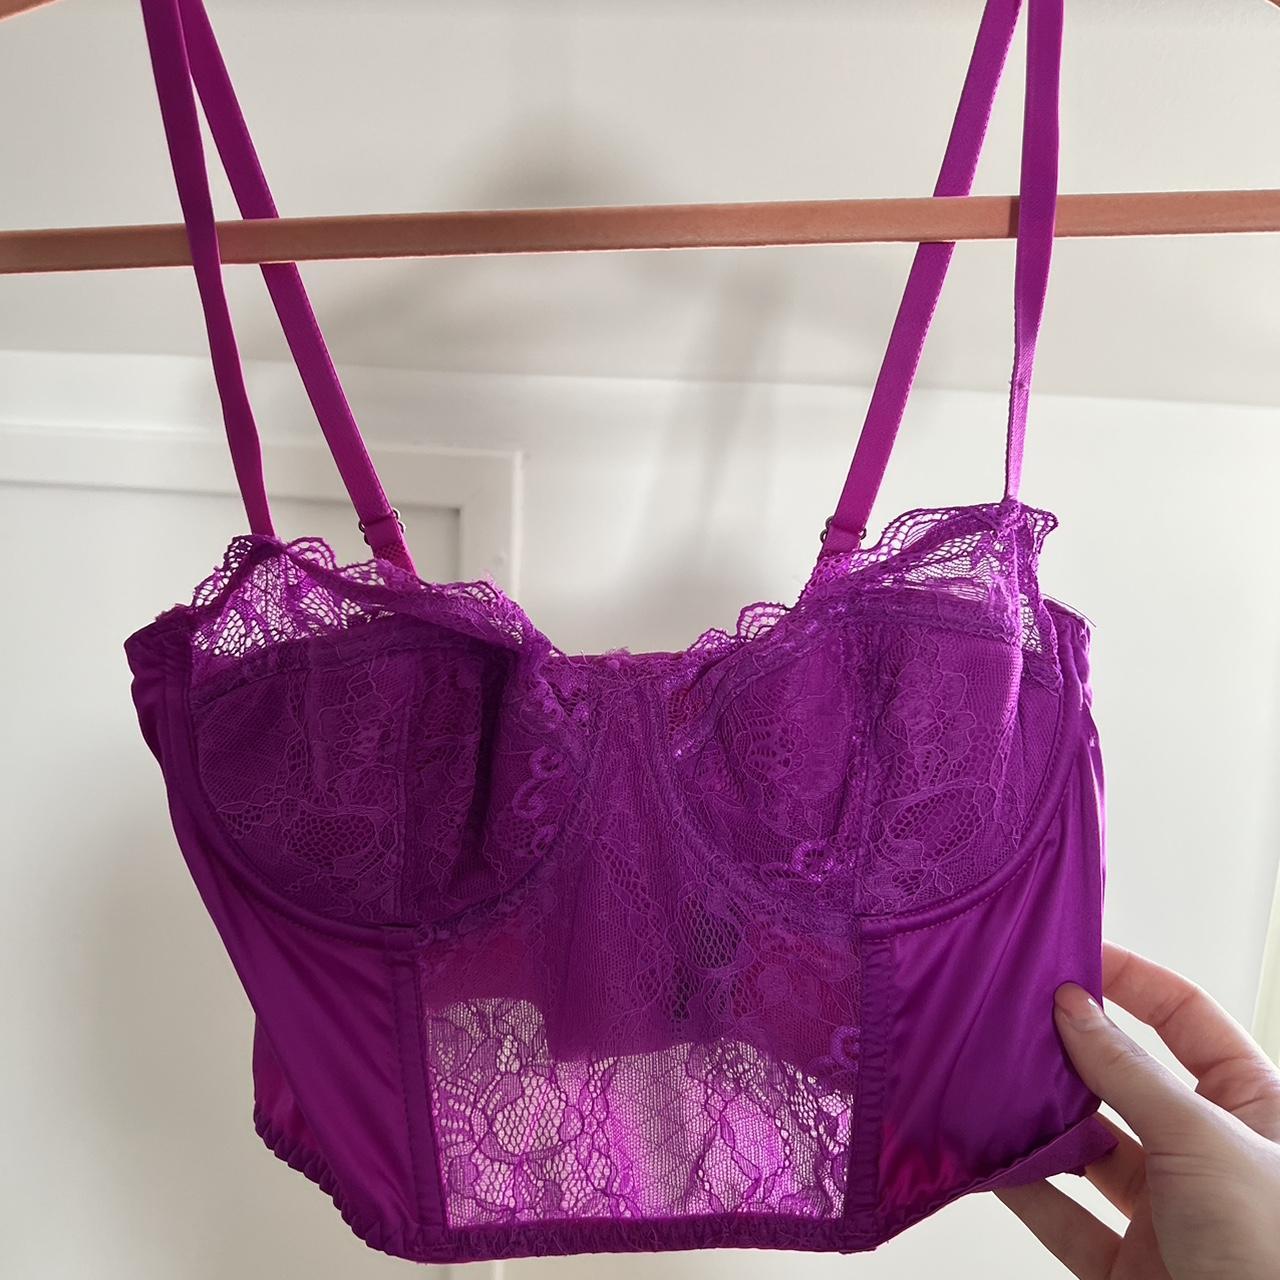 34D primark corset top in a pinky purple colour - Depop